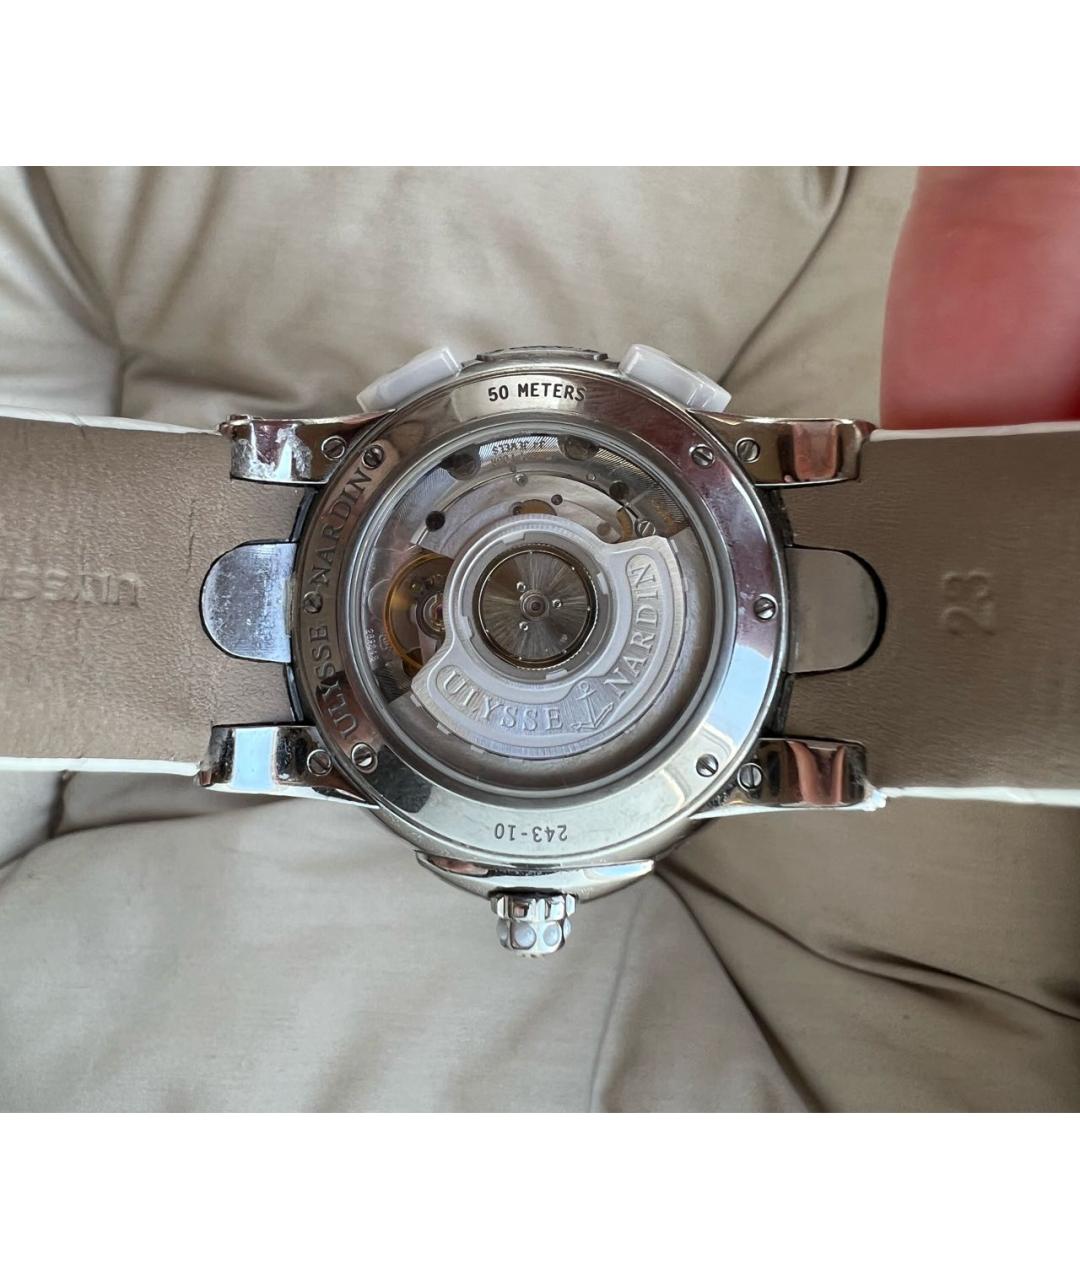 Ulysse Nardin Белые металлические часы, фото 2